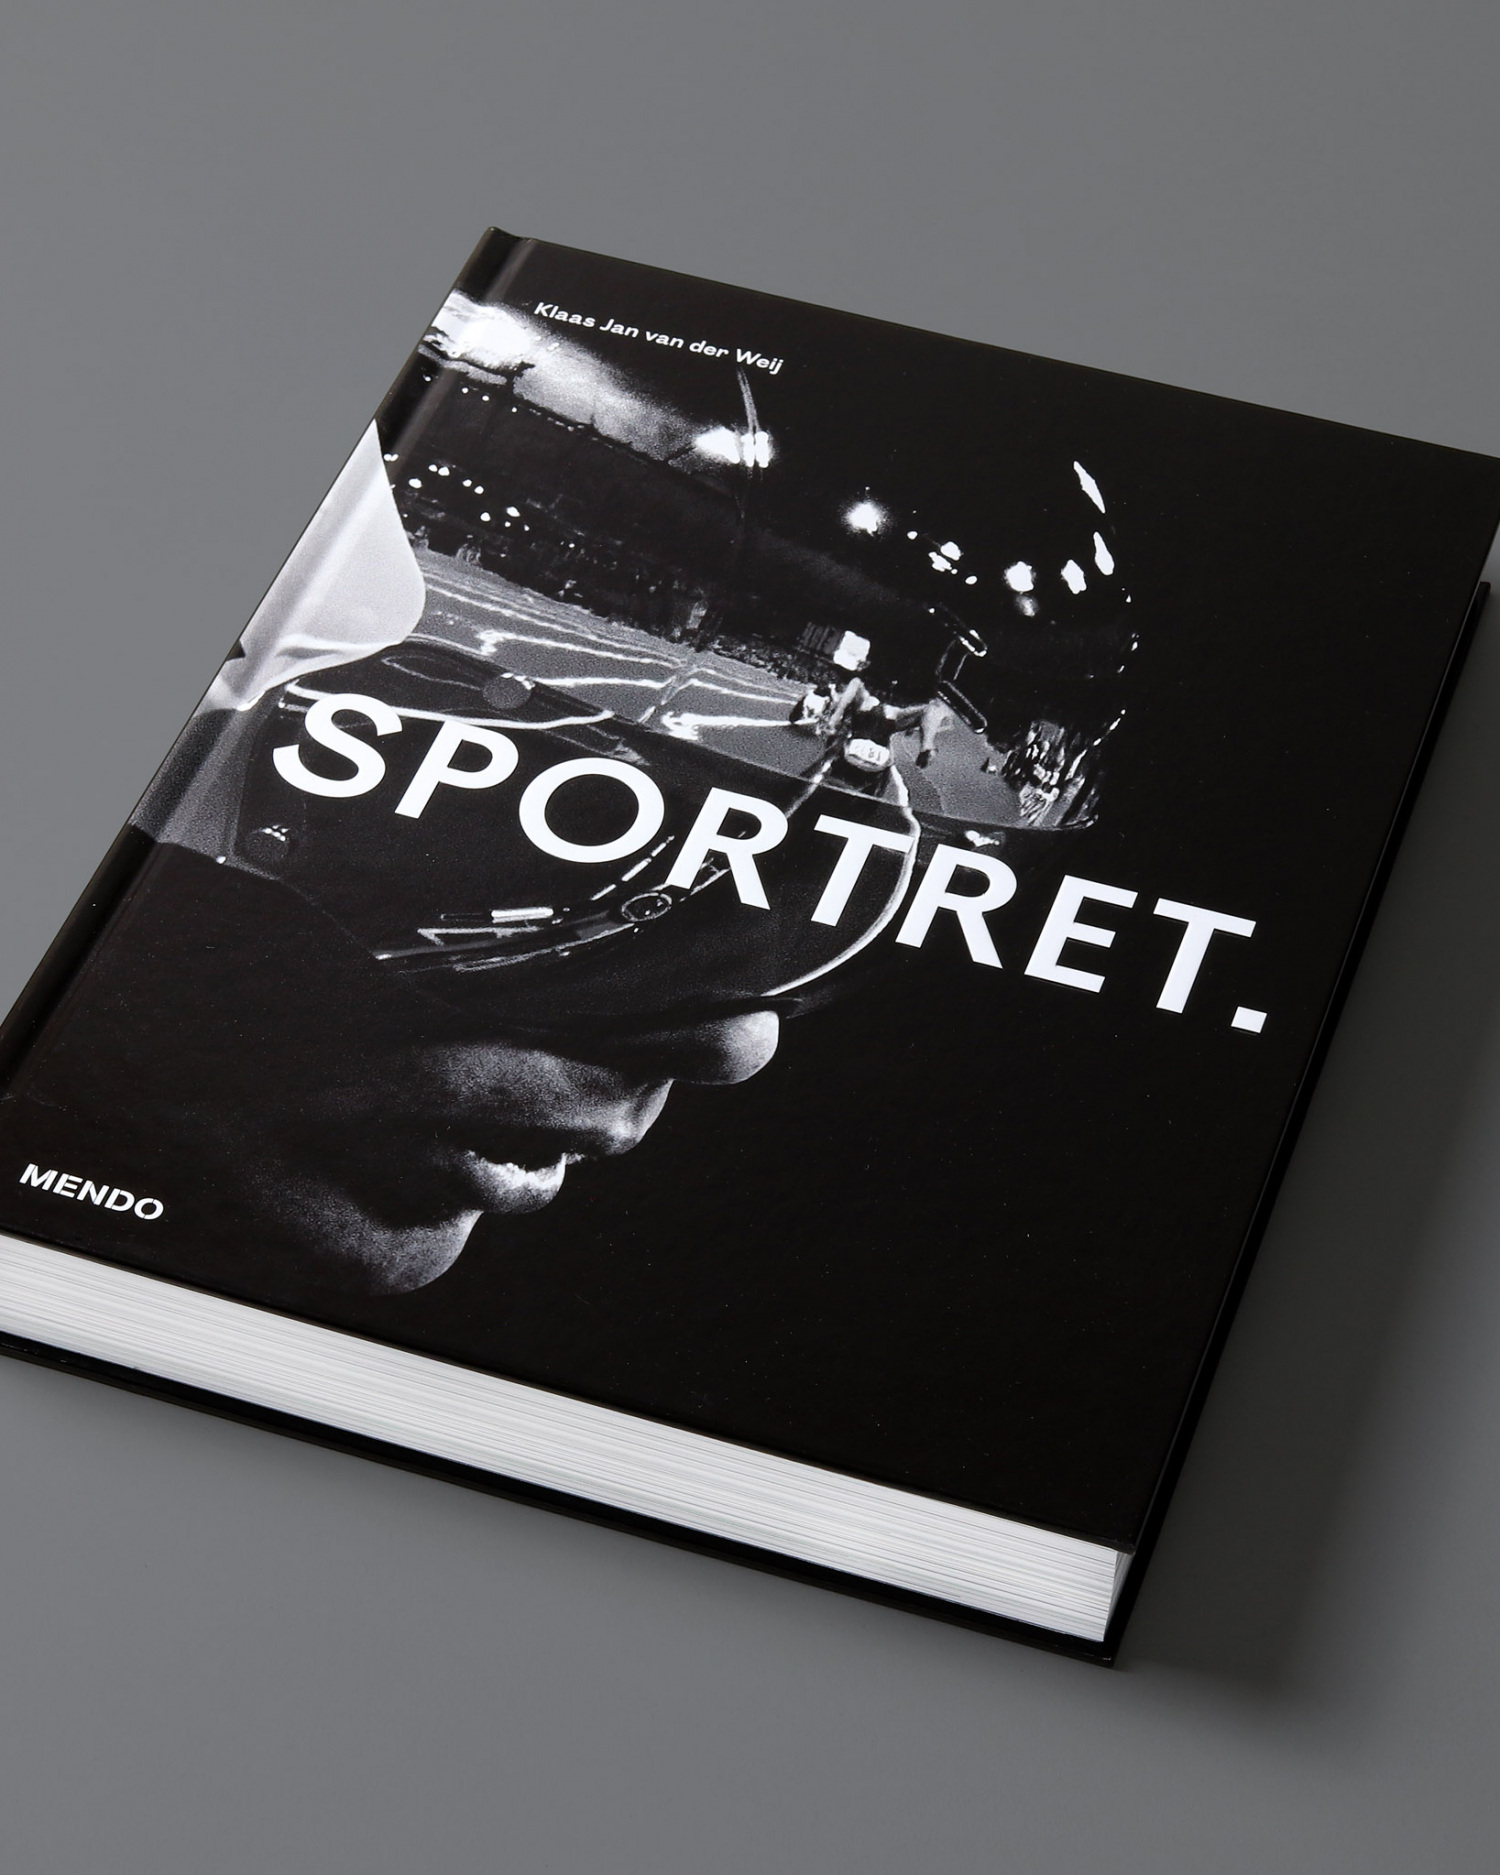 mendo-books-Sportret-studio-01-1-van-18-1500x1875-c-default.jpg